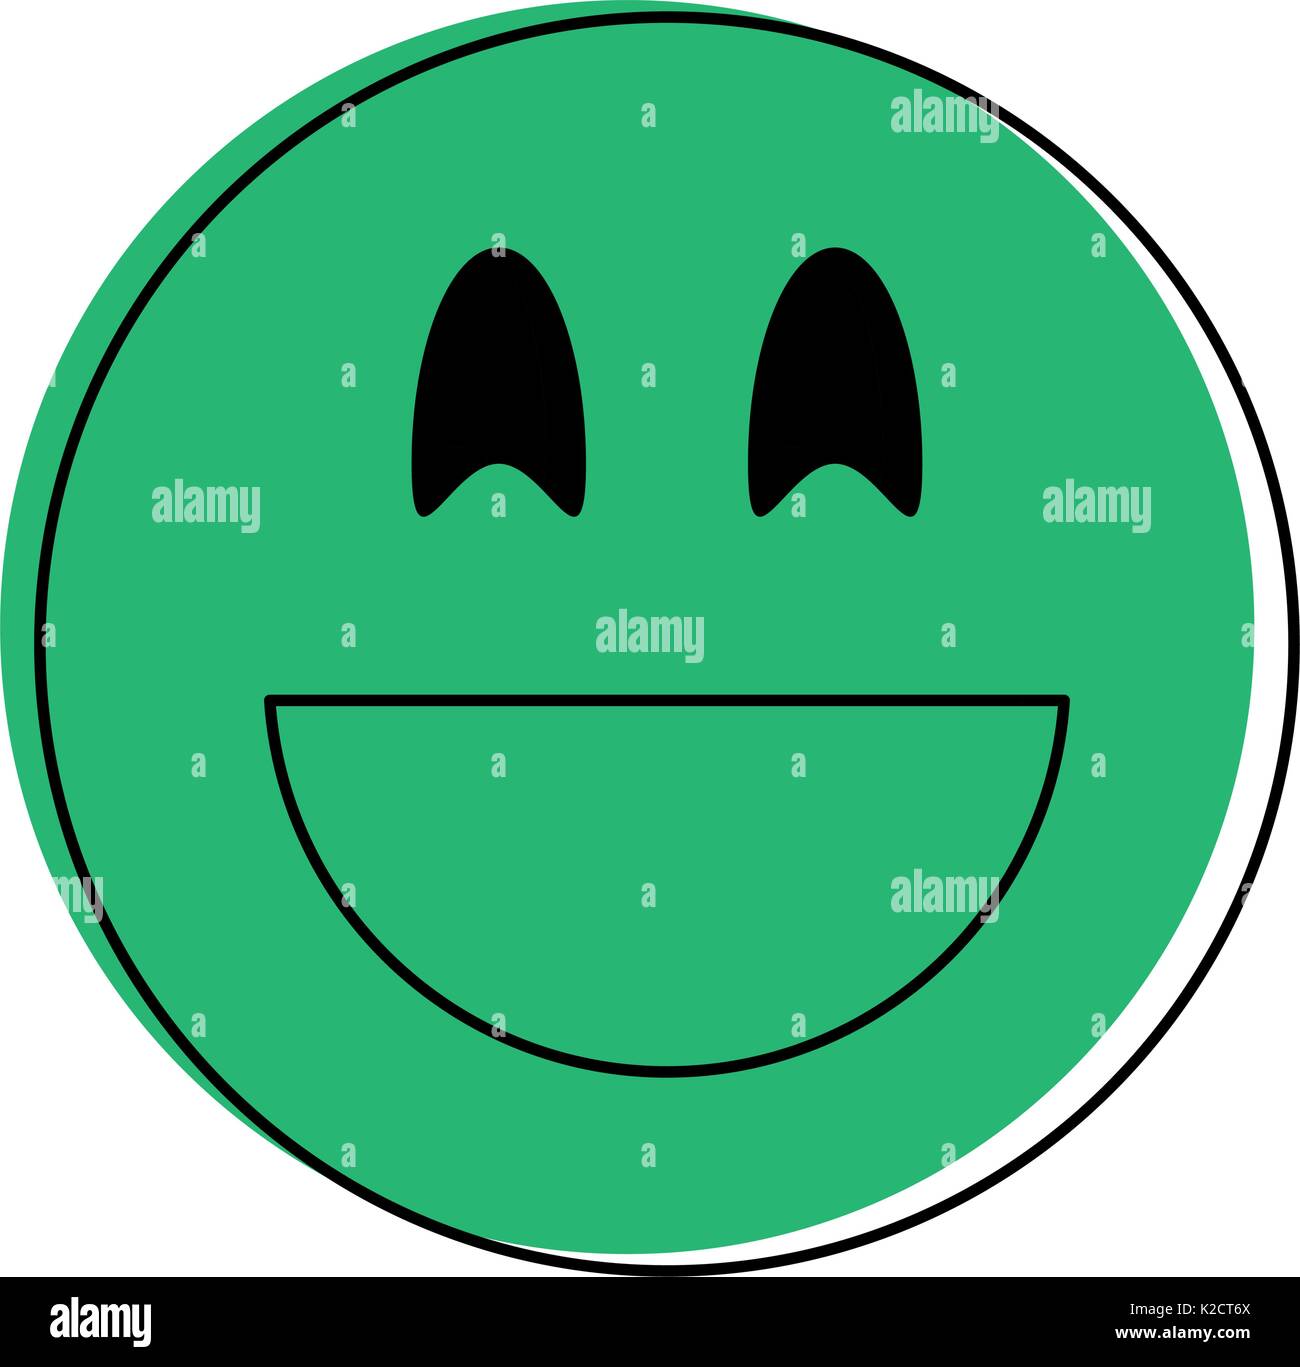 happy grin emoji instant messaging  icon image  Stock Vector